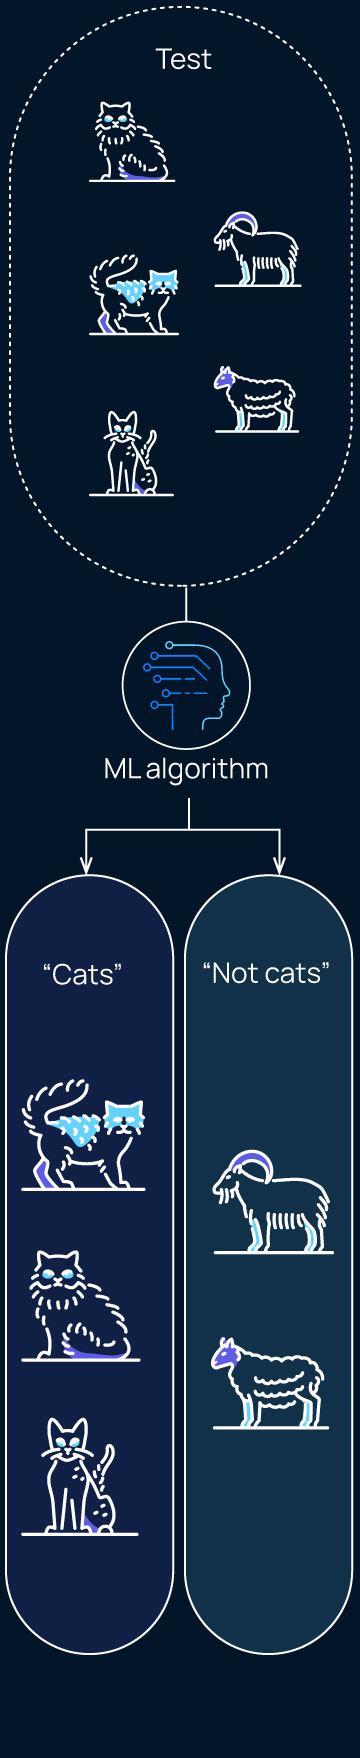 AI-diagram-mobile-ML-2